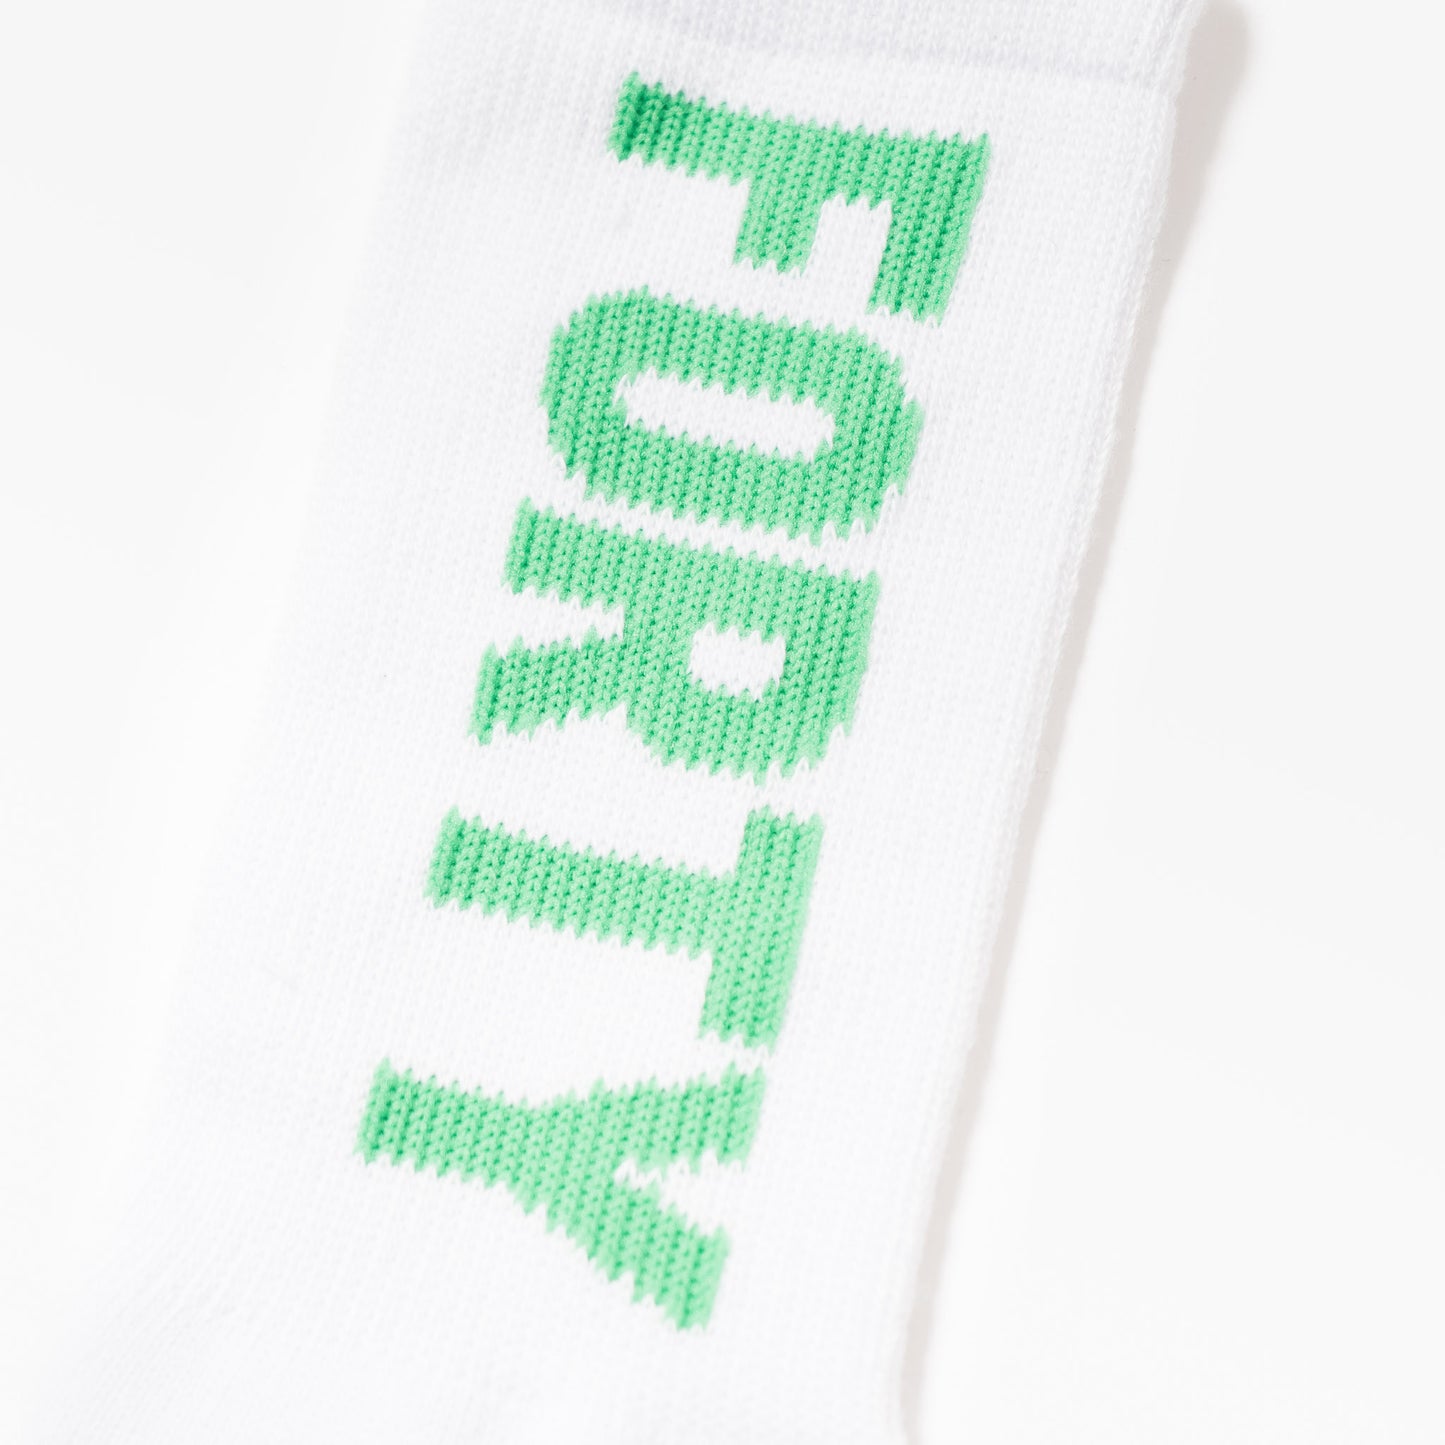 Ayton Socks (White/Green)